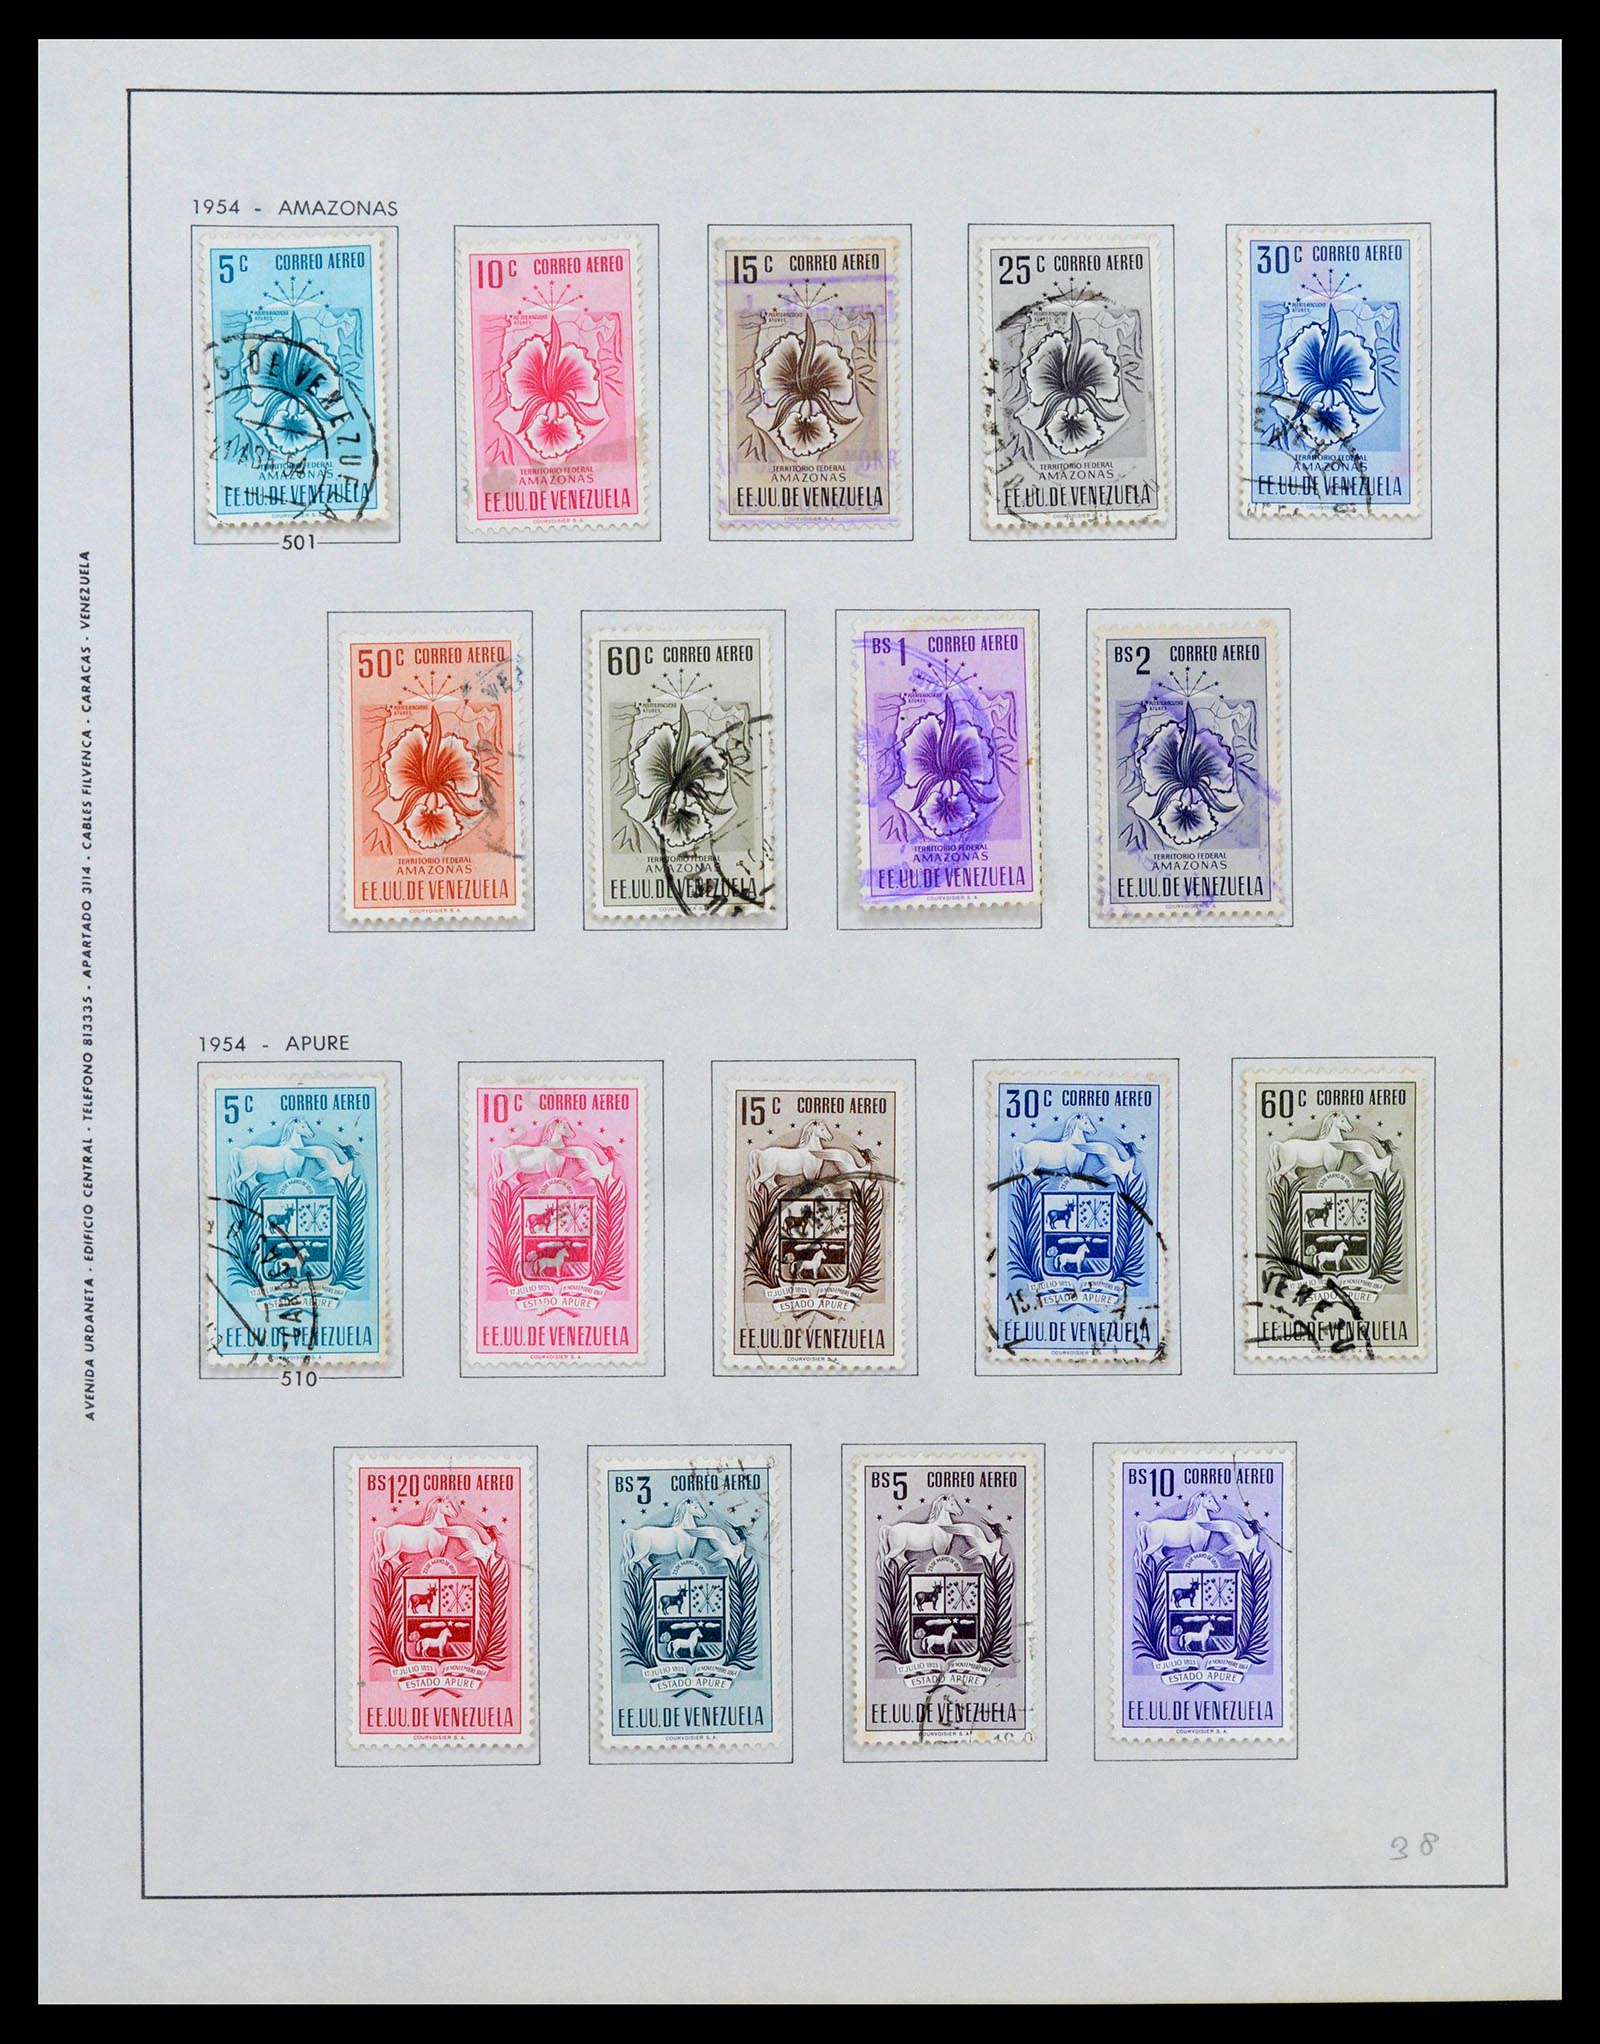 39436 0030 - Stamp collection 39436 Venezuela 1859-1985.